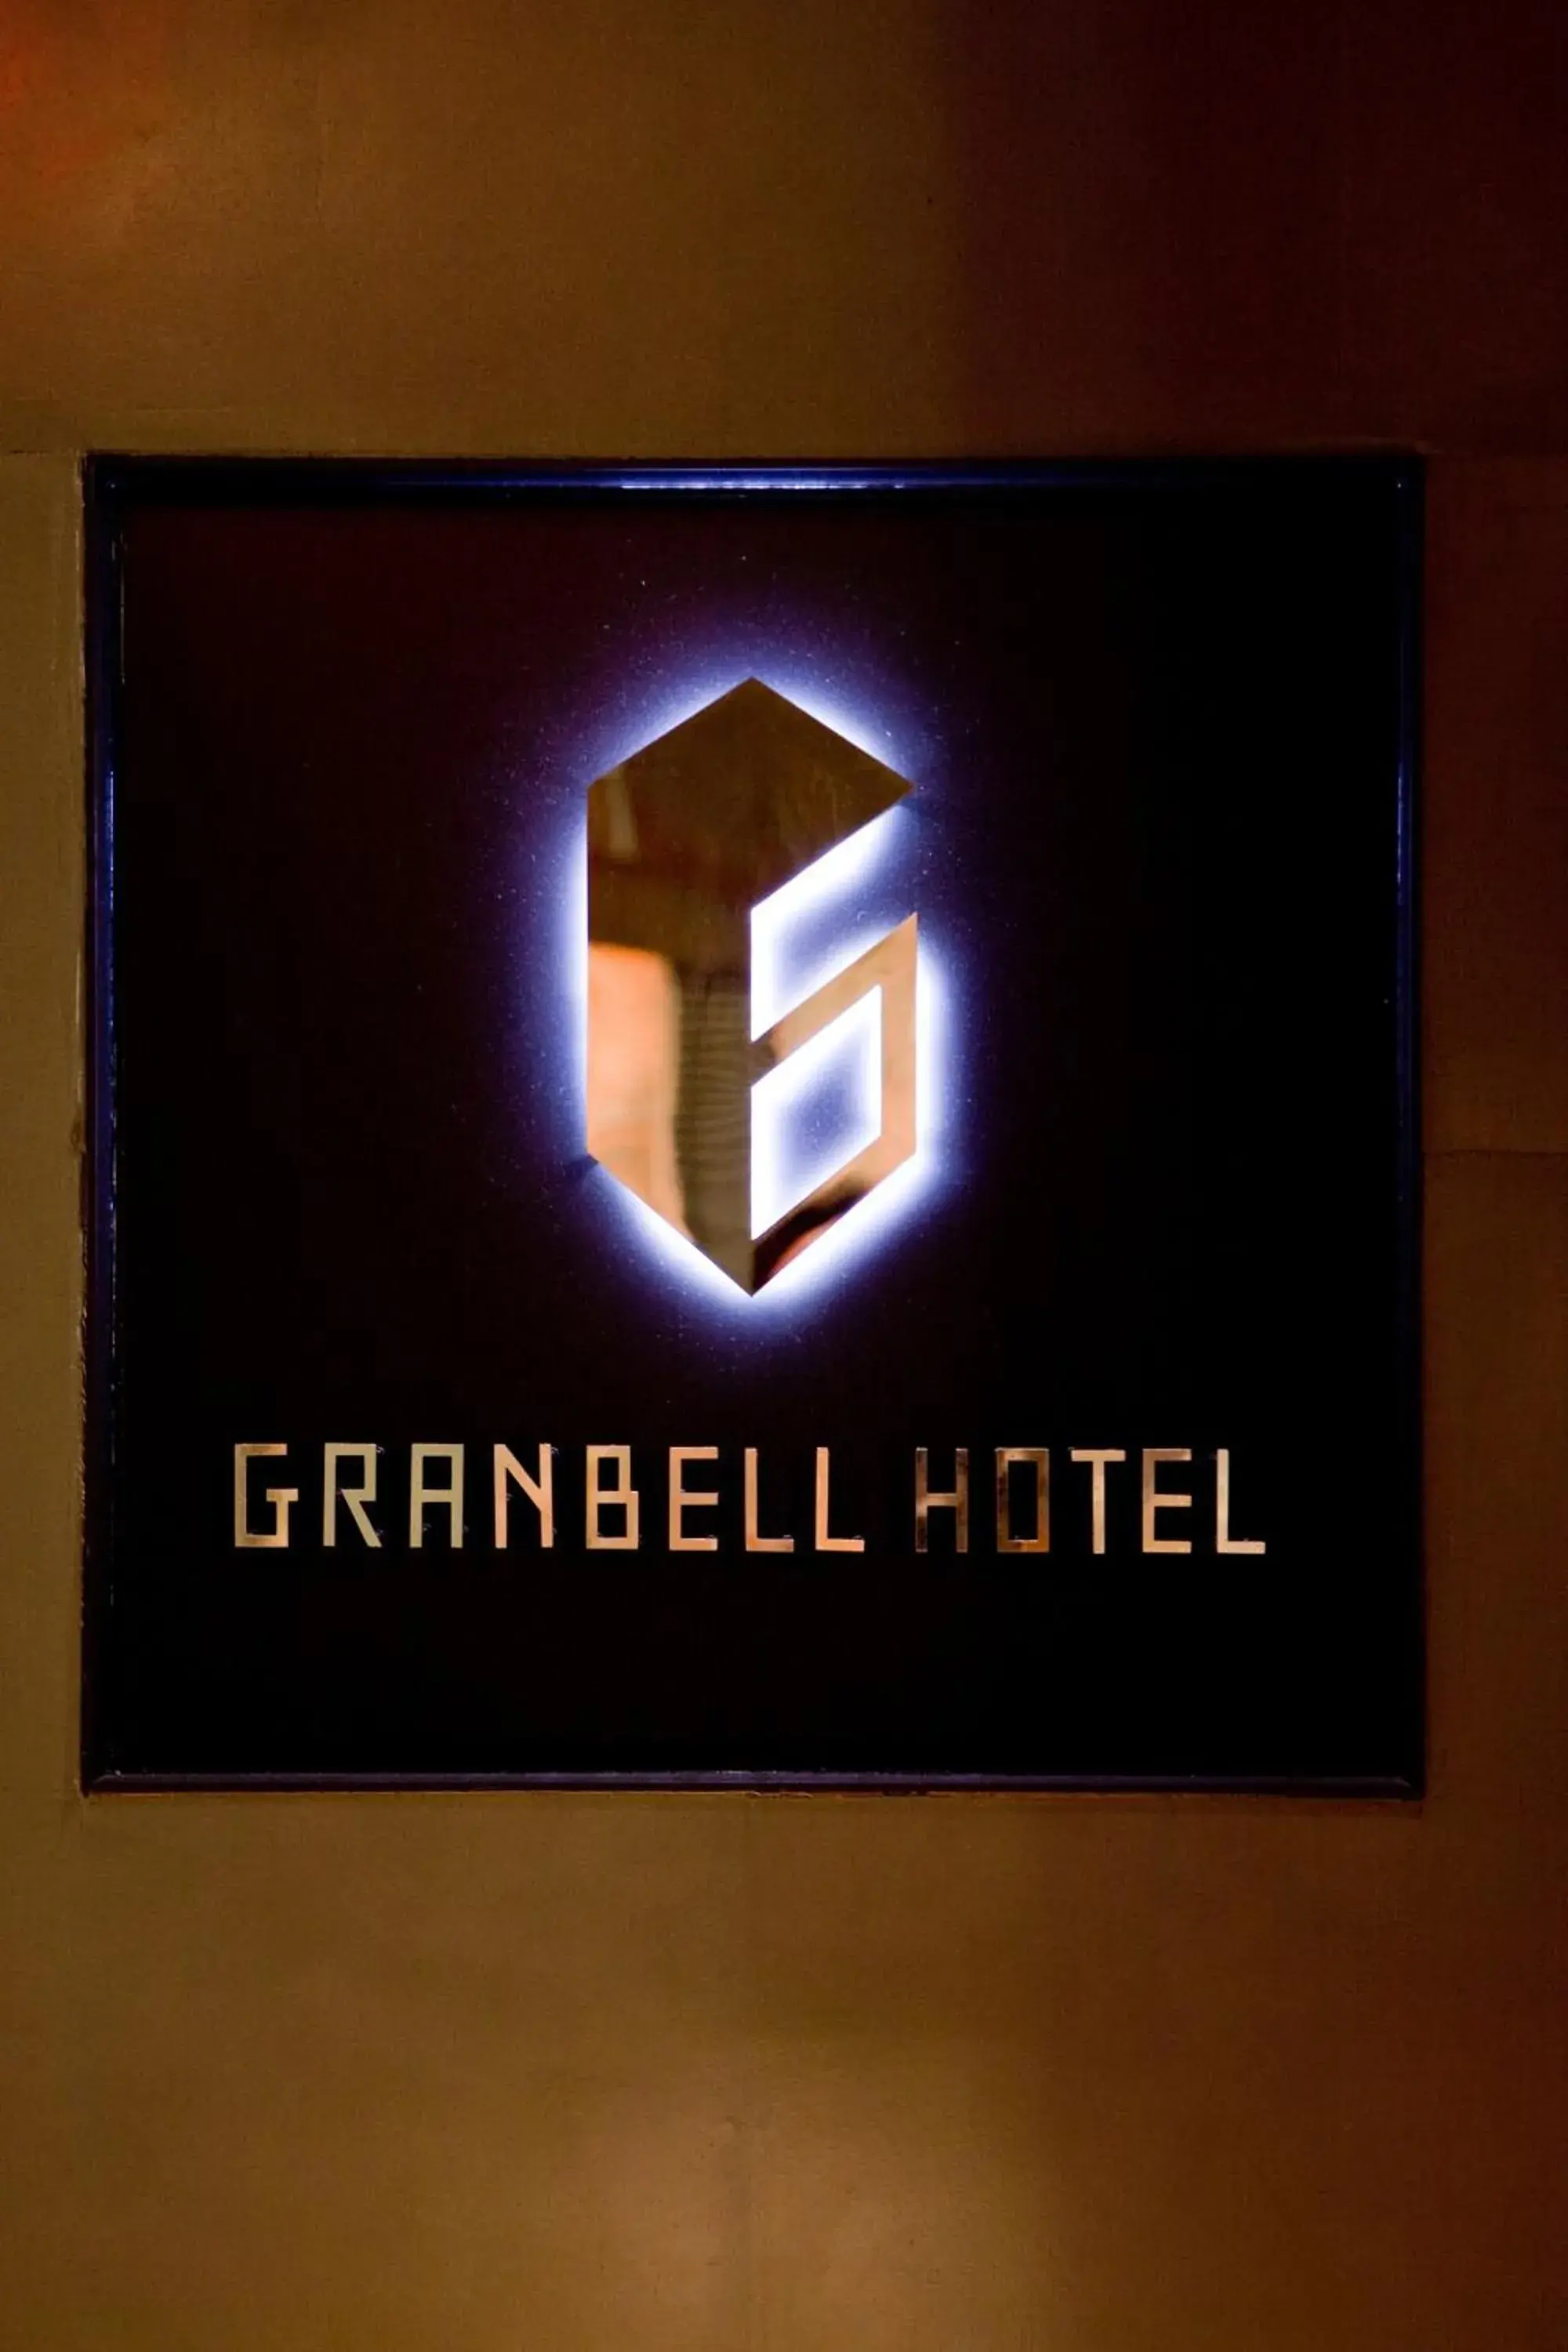 Property logo or sign in Akasaka Granbell Hotel